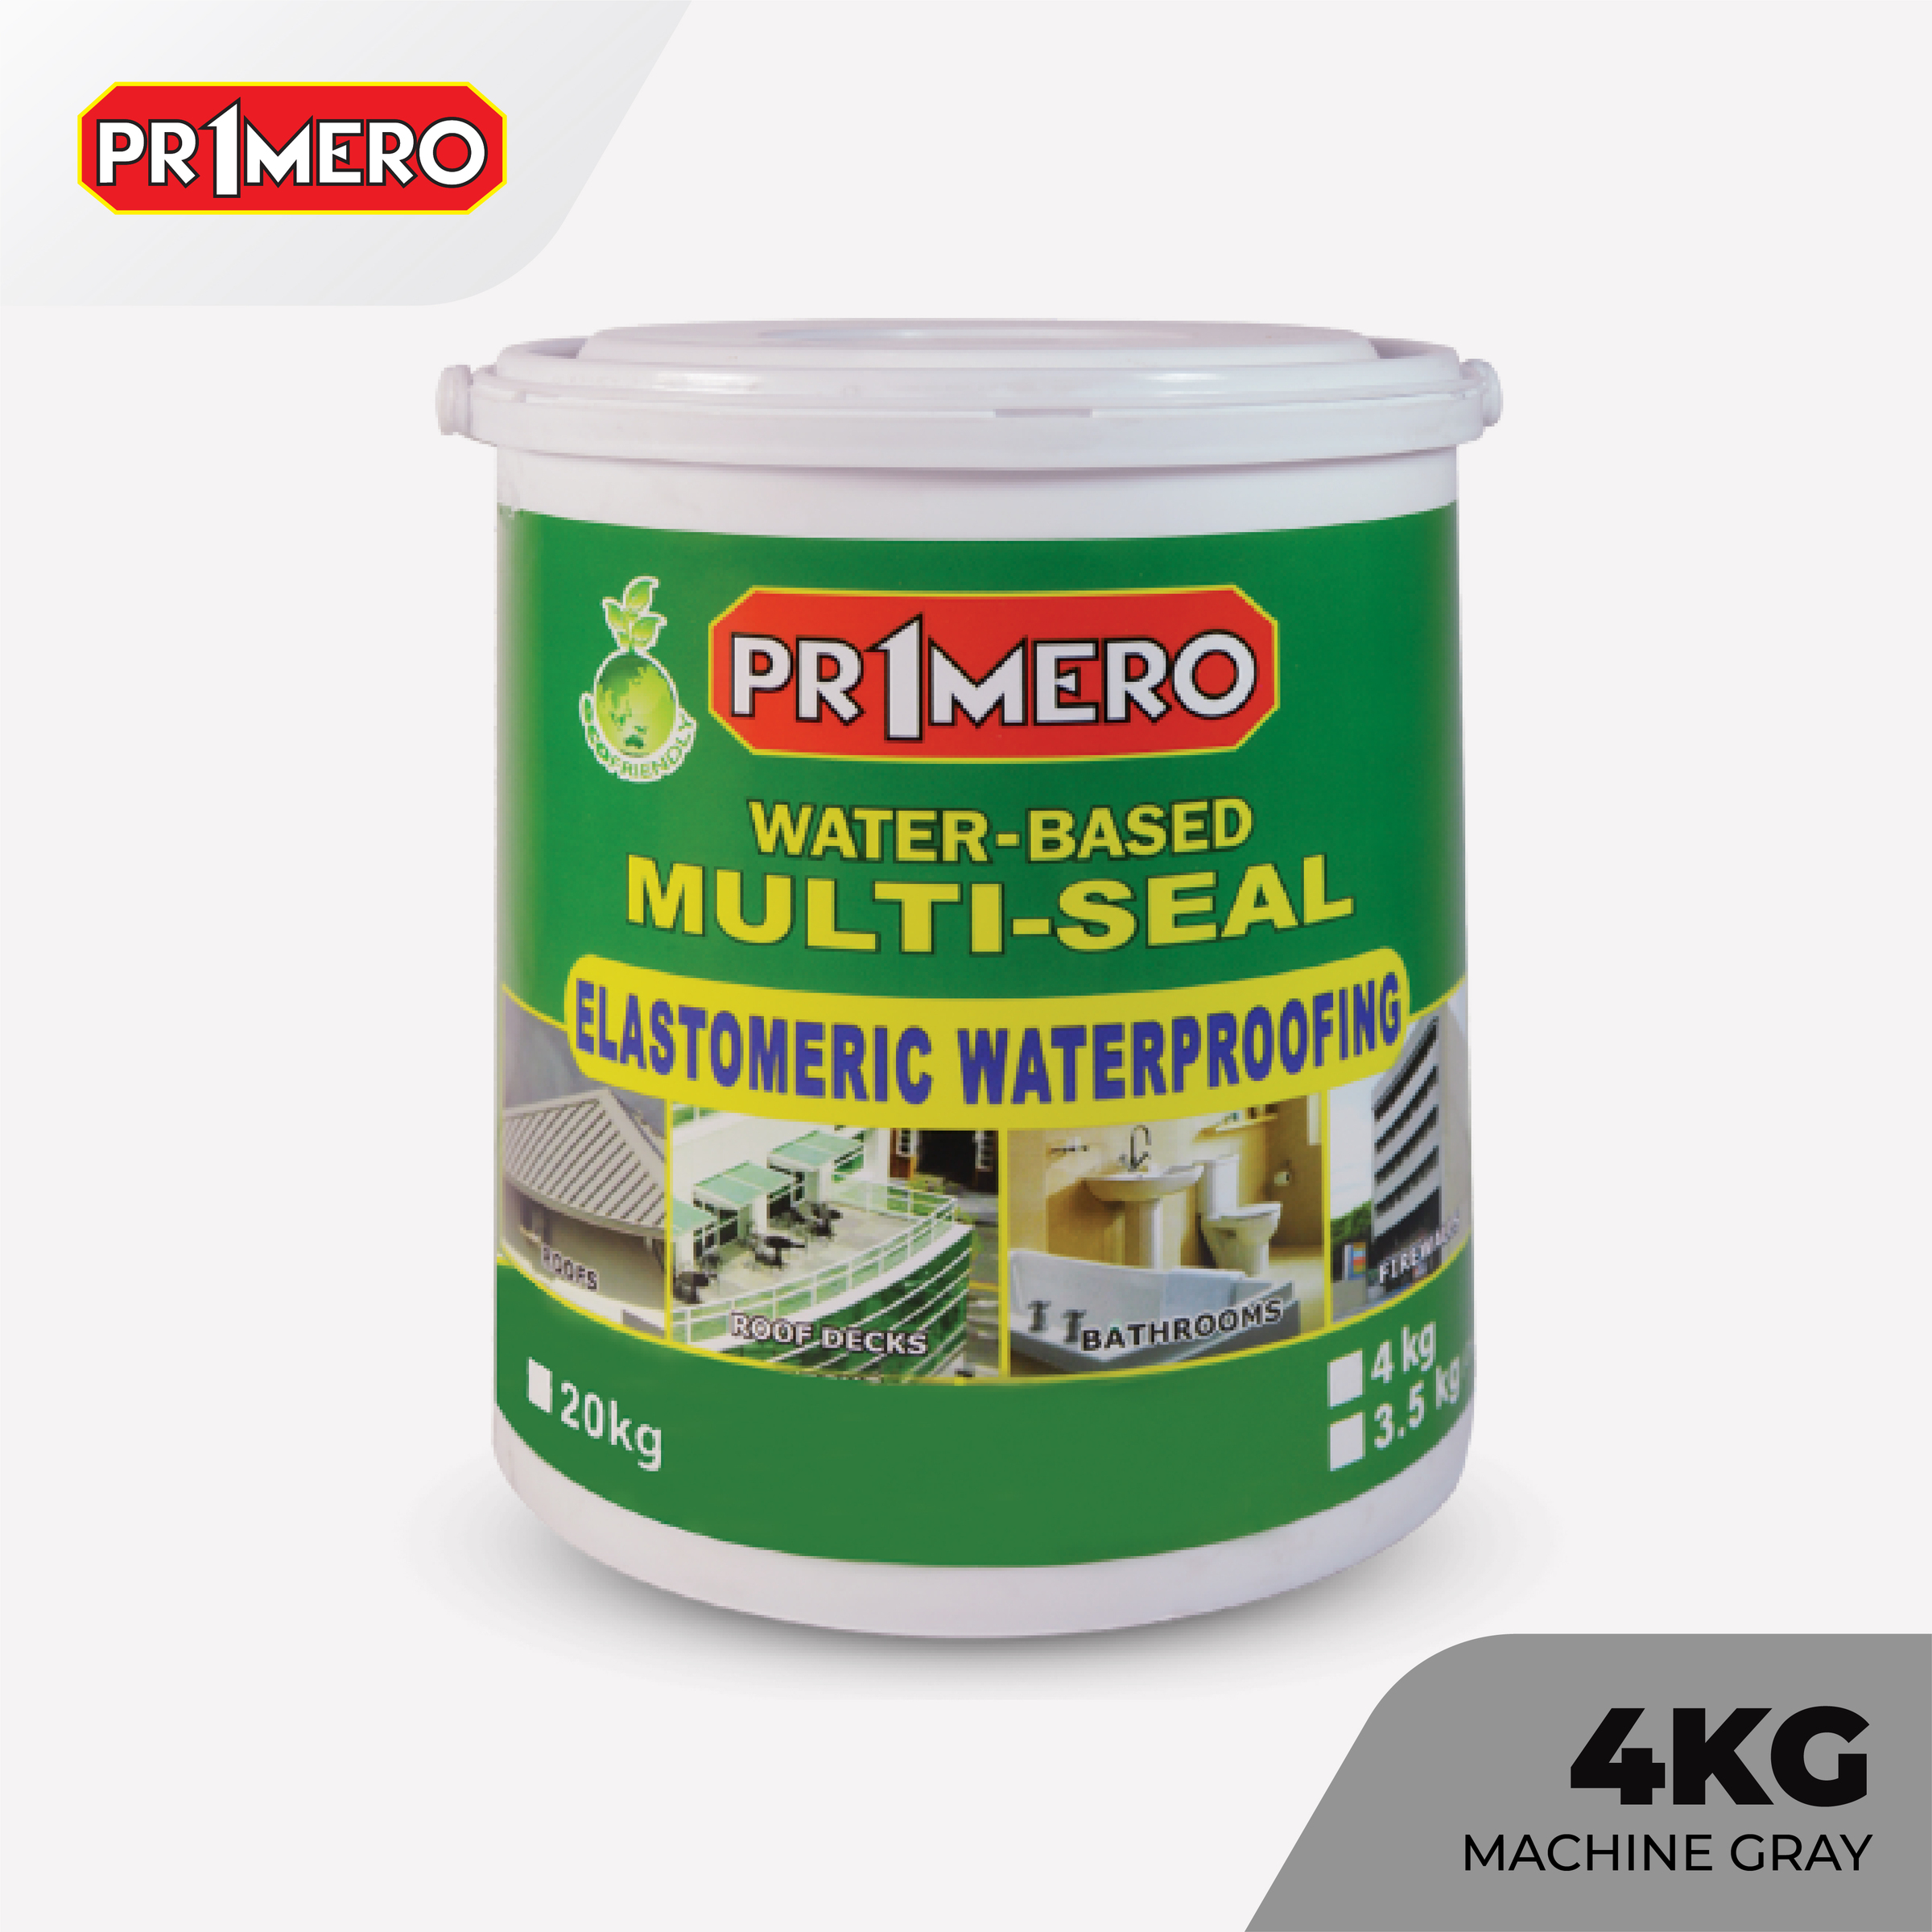 Primero Multi-Seal Elastomeric Waterproofing Sealant Machine Grey - 4Kg